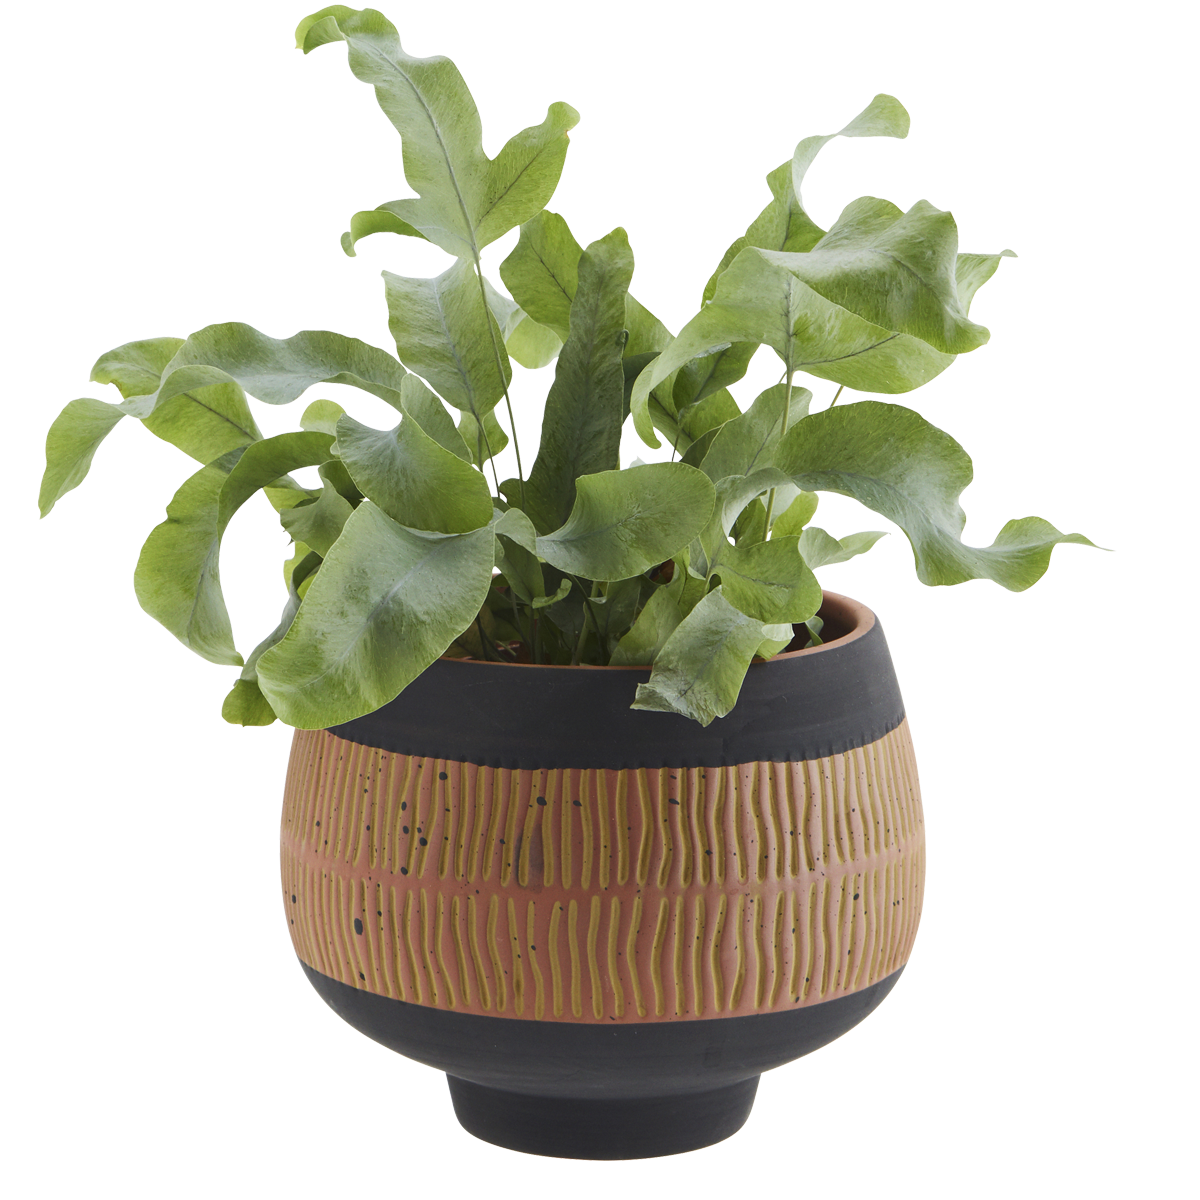 Hand painted terracotta flower pot